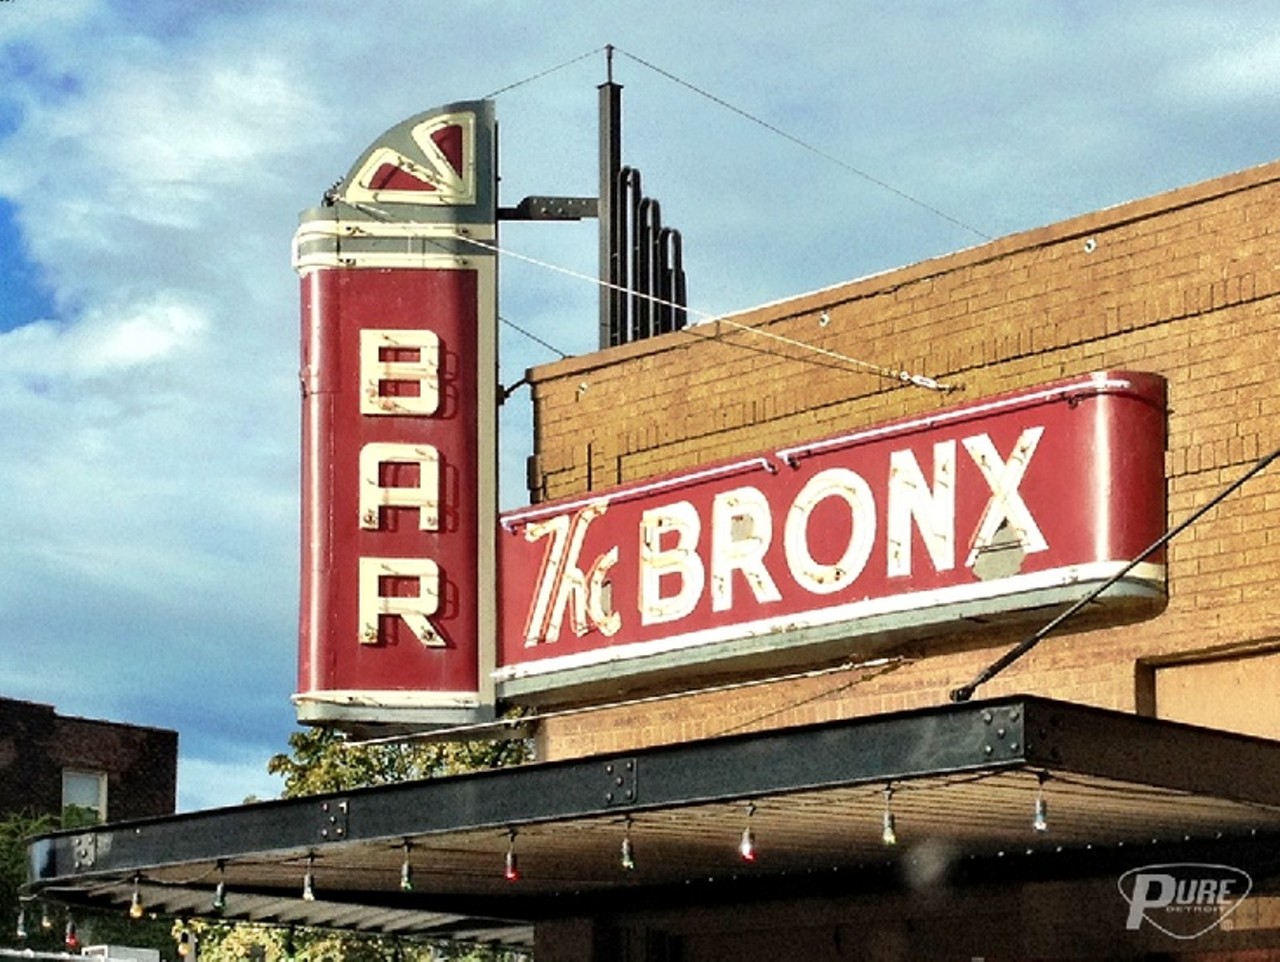 The Bronx
4476 Second Ave., Detroit
313-832-8464
Bronx Bar